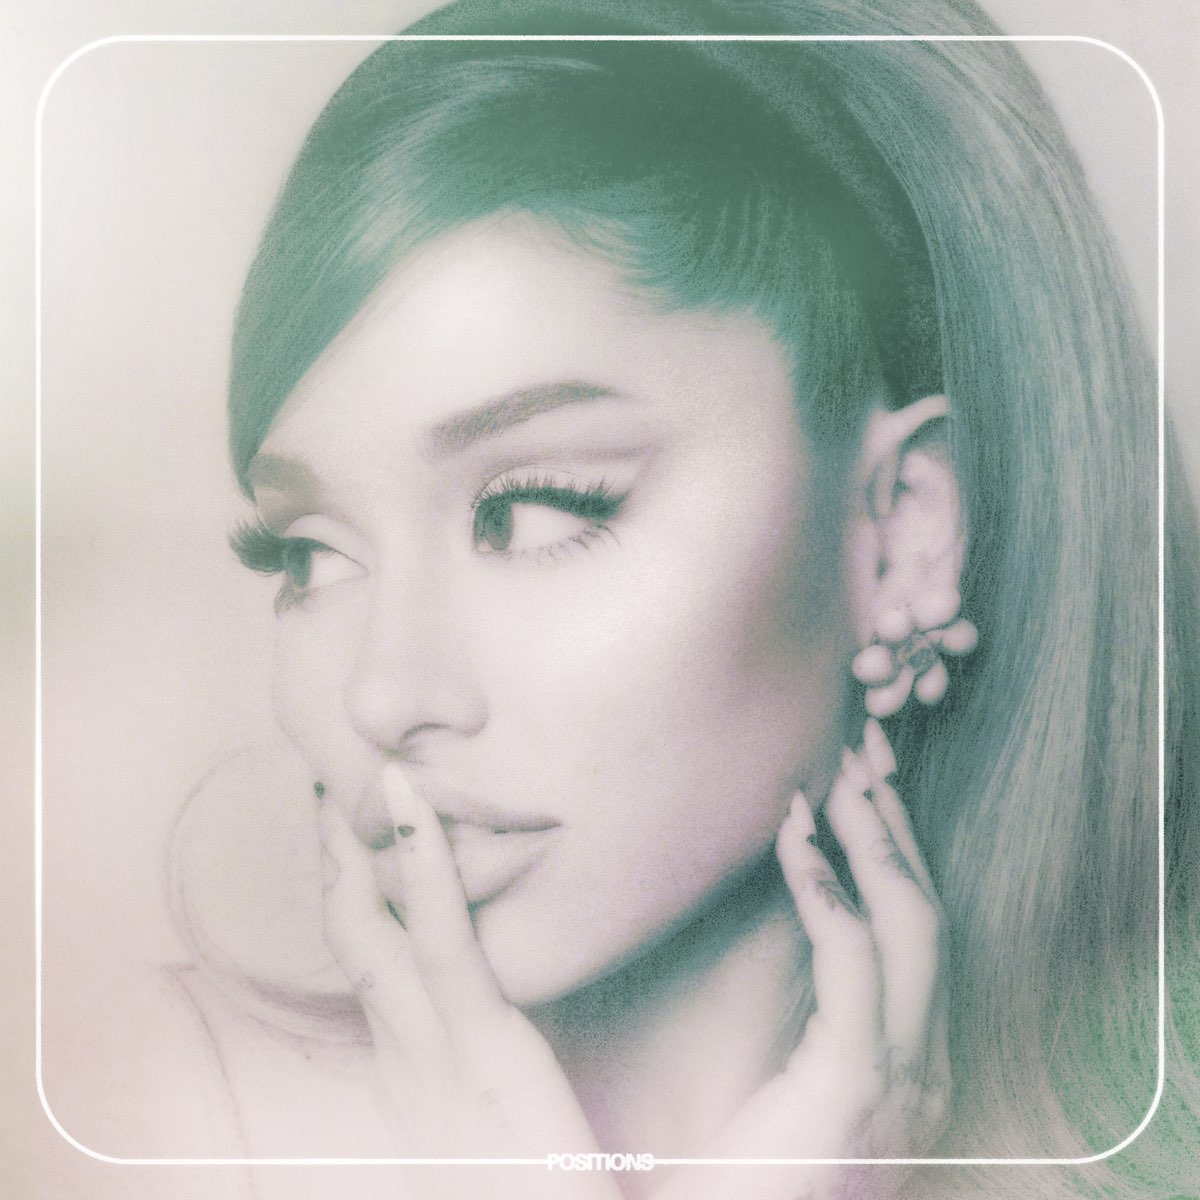 Ariana Grande - 34+35 - Positions by Ariana Grande Album artwork - Cover My Tunes